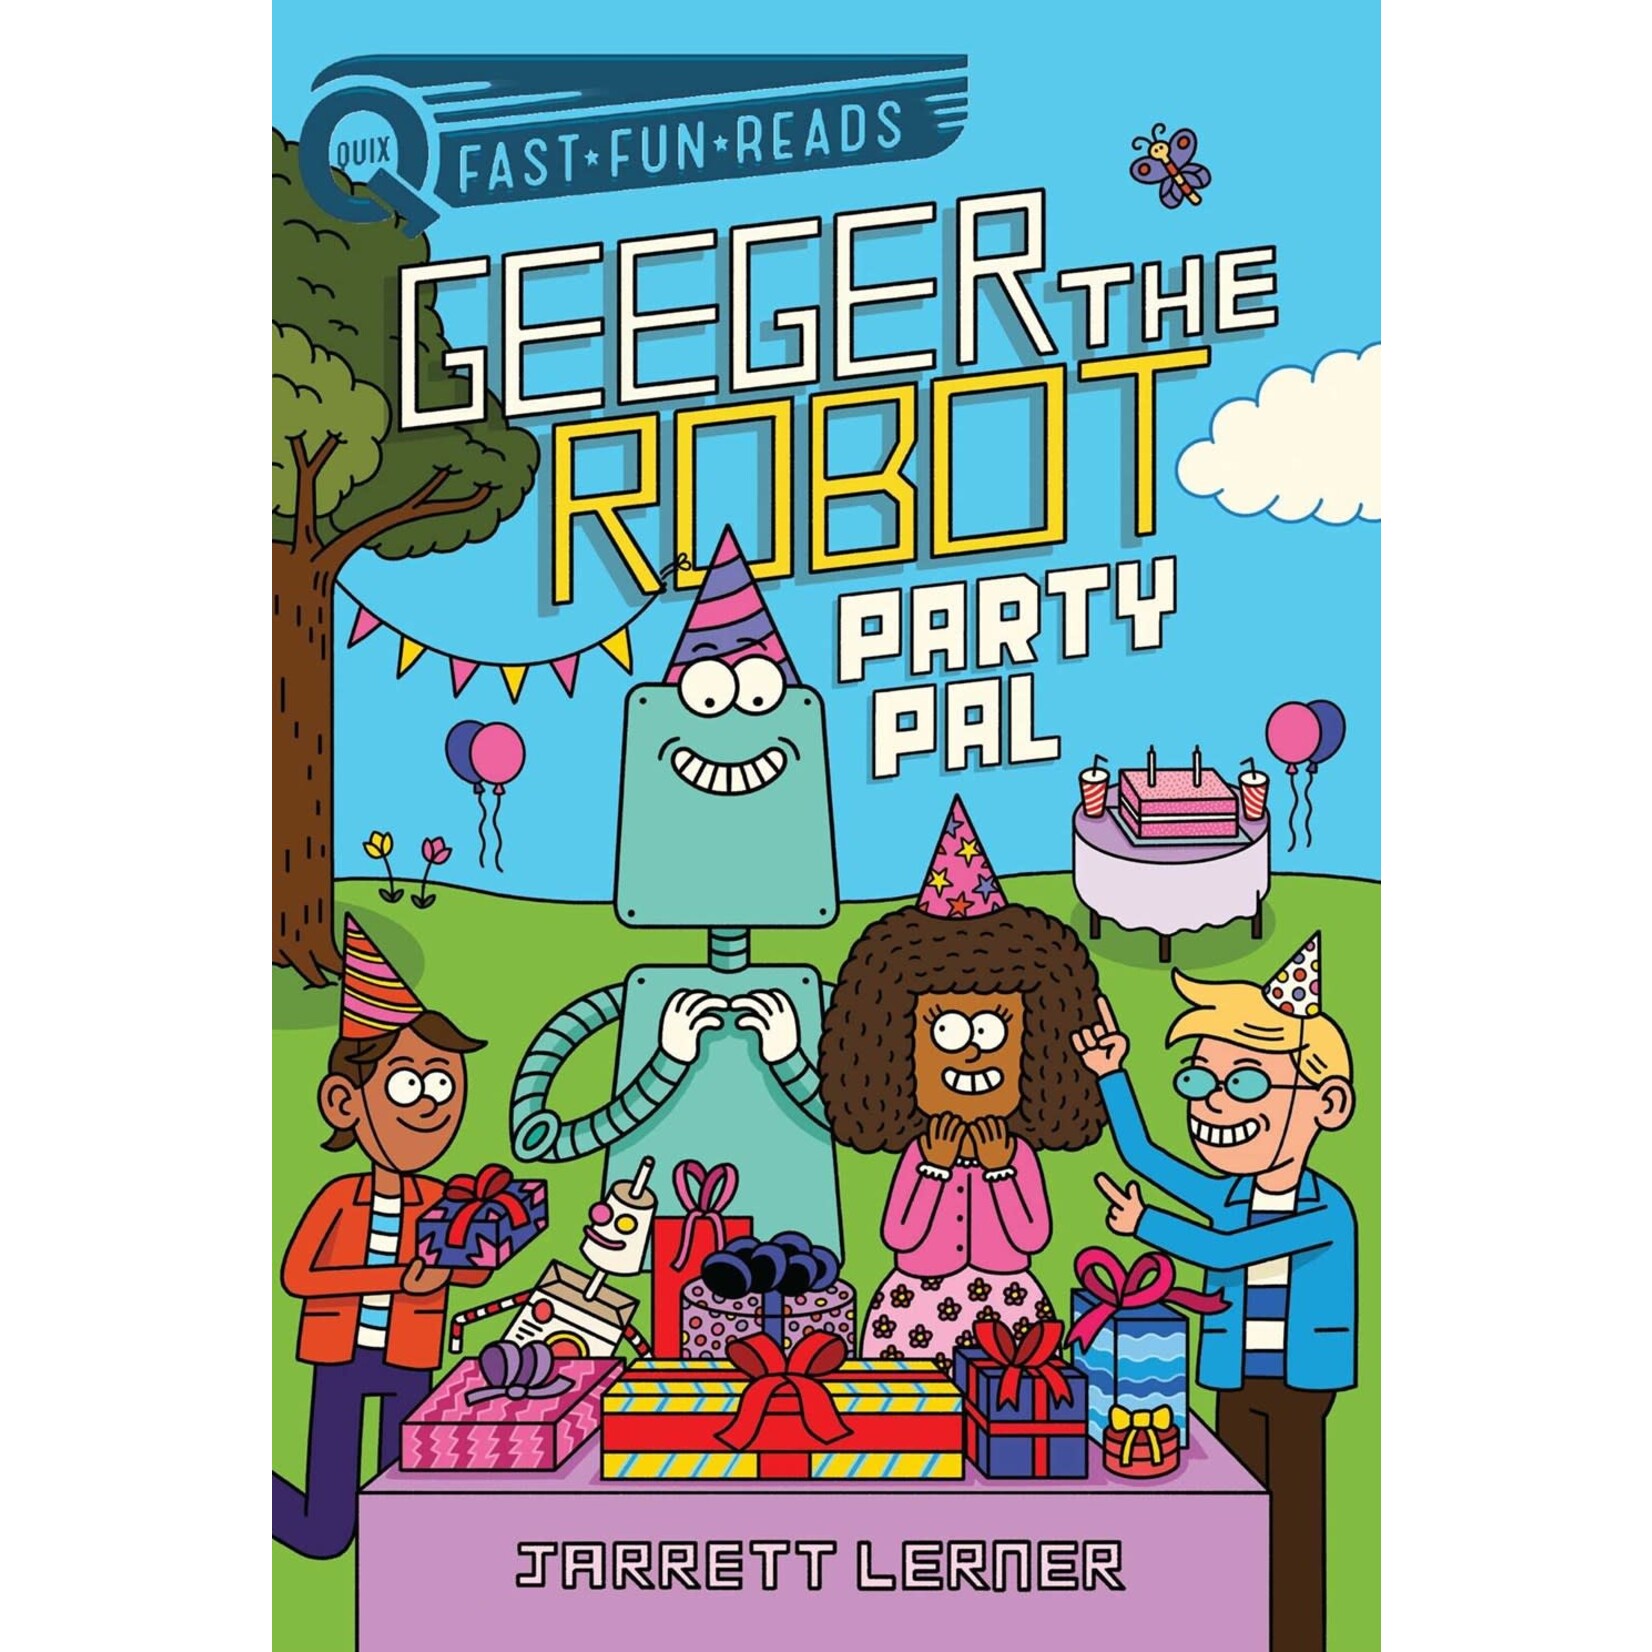 Party Pal: A QUIX Book (Geeger the Robot #4)